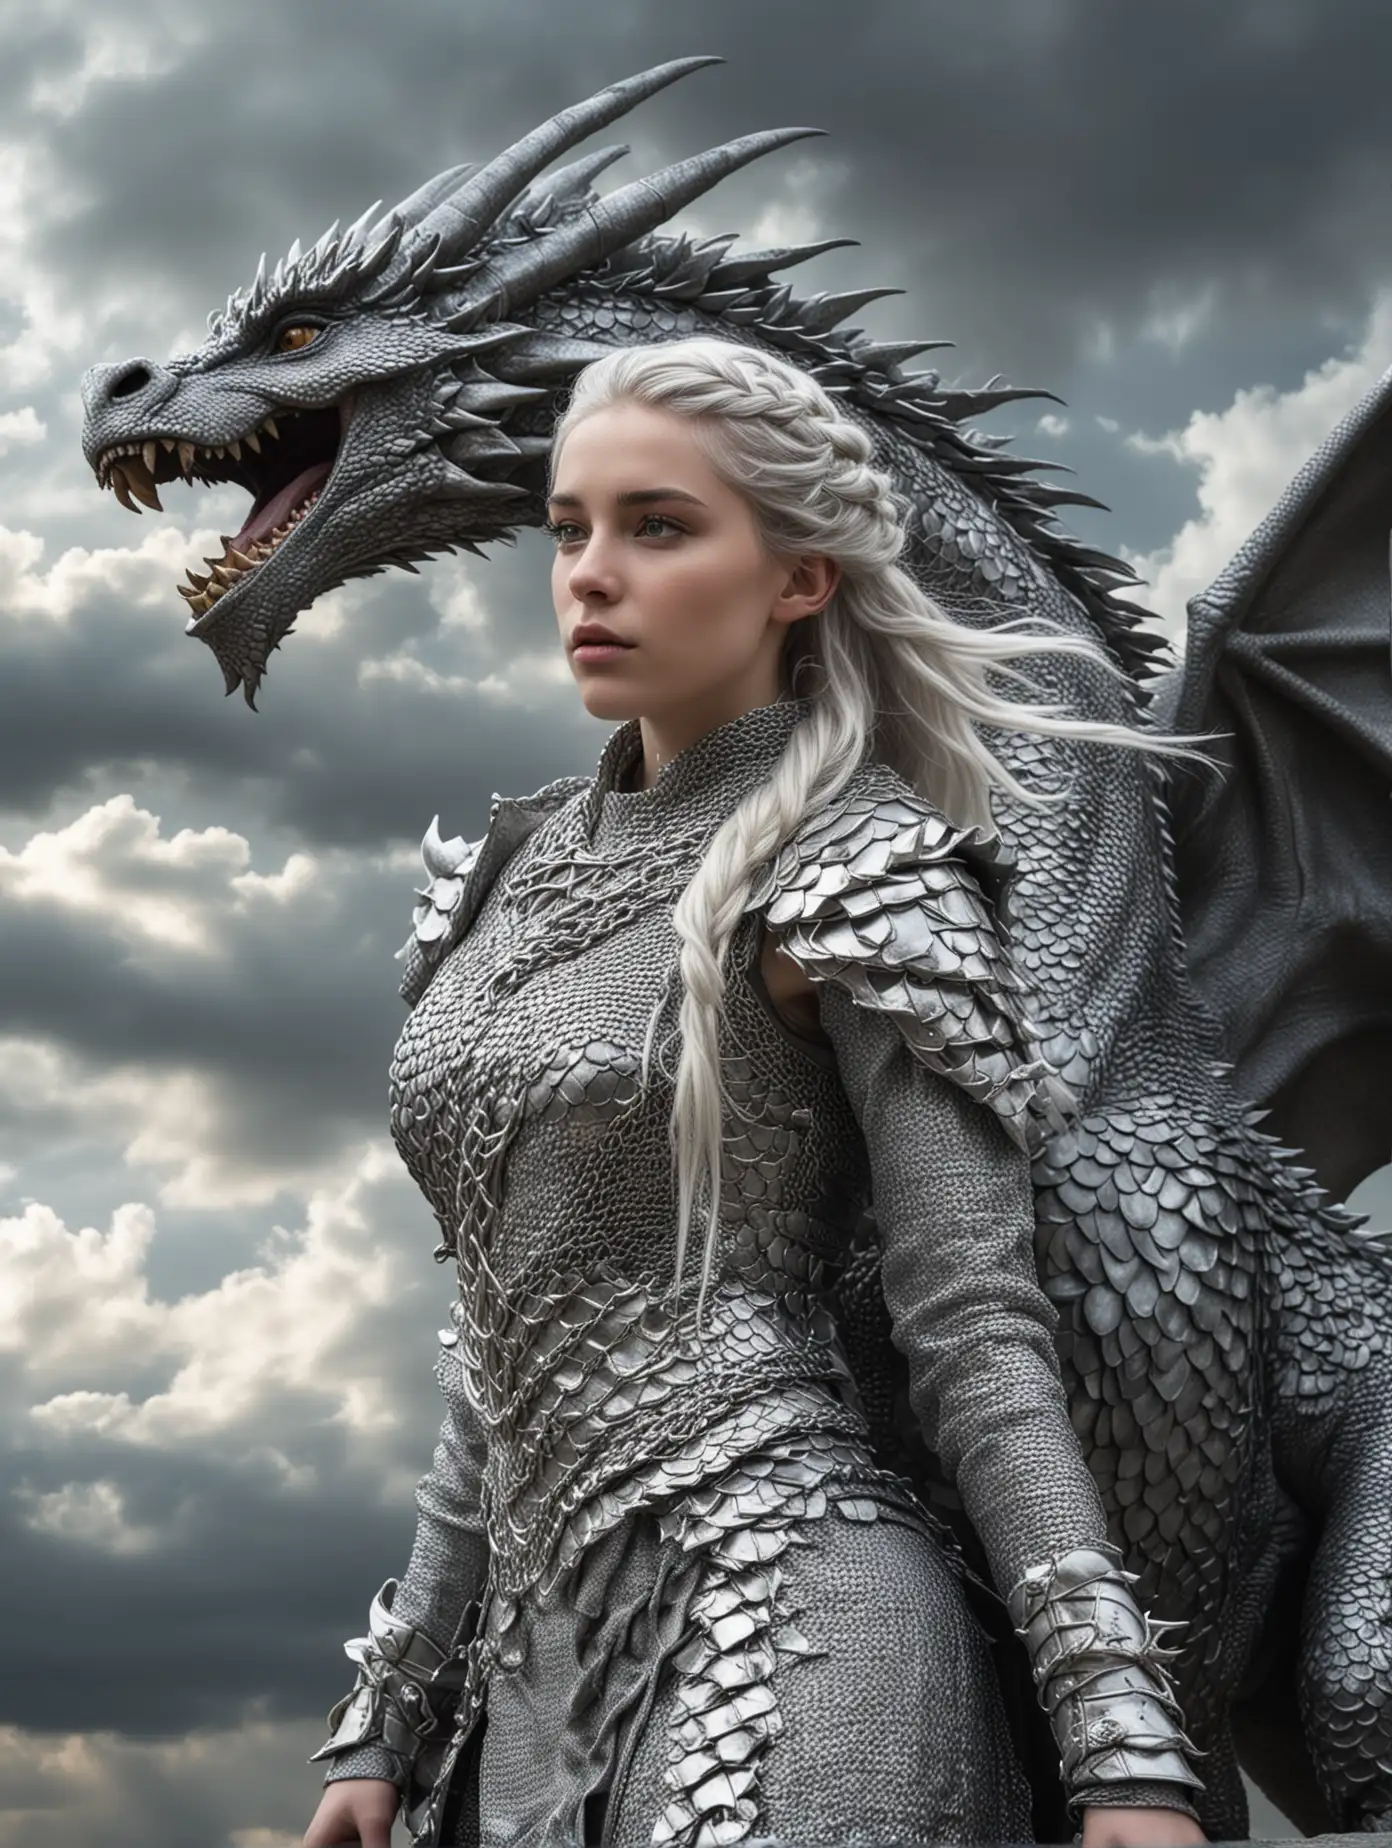 Fantasy Woman Riding Silver Dragon in Medieval Sky